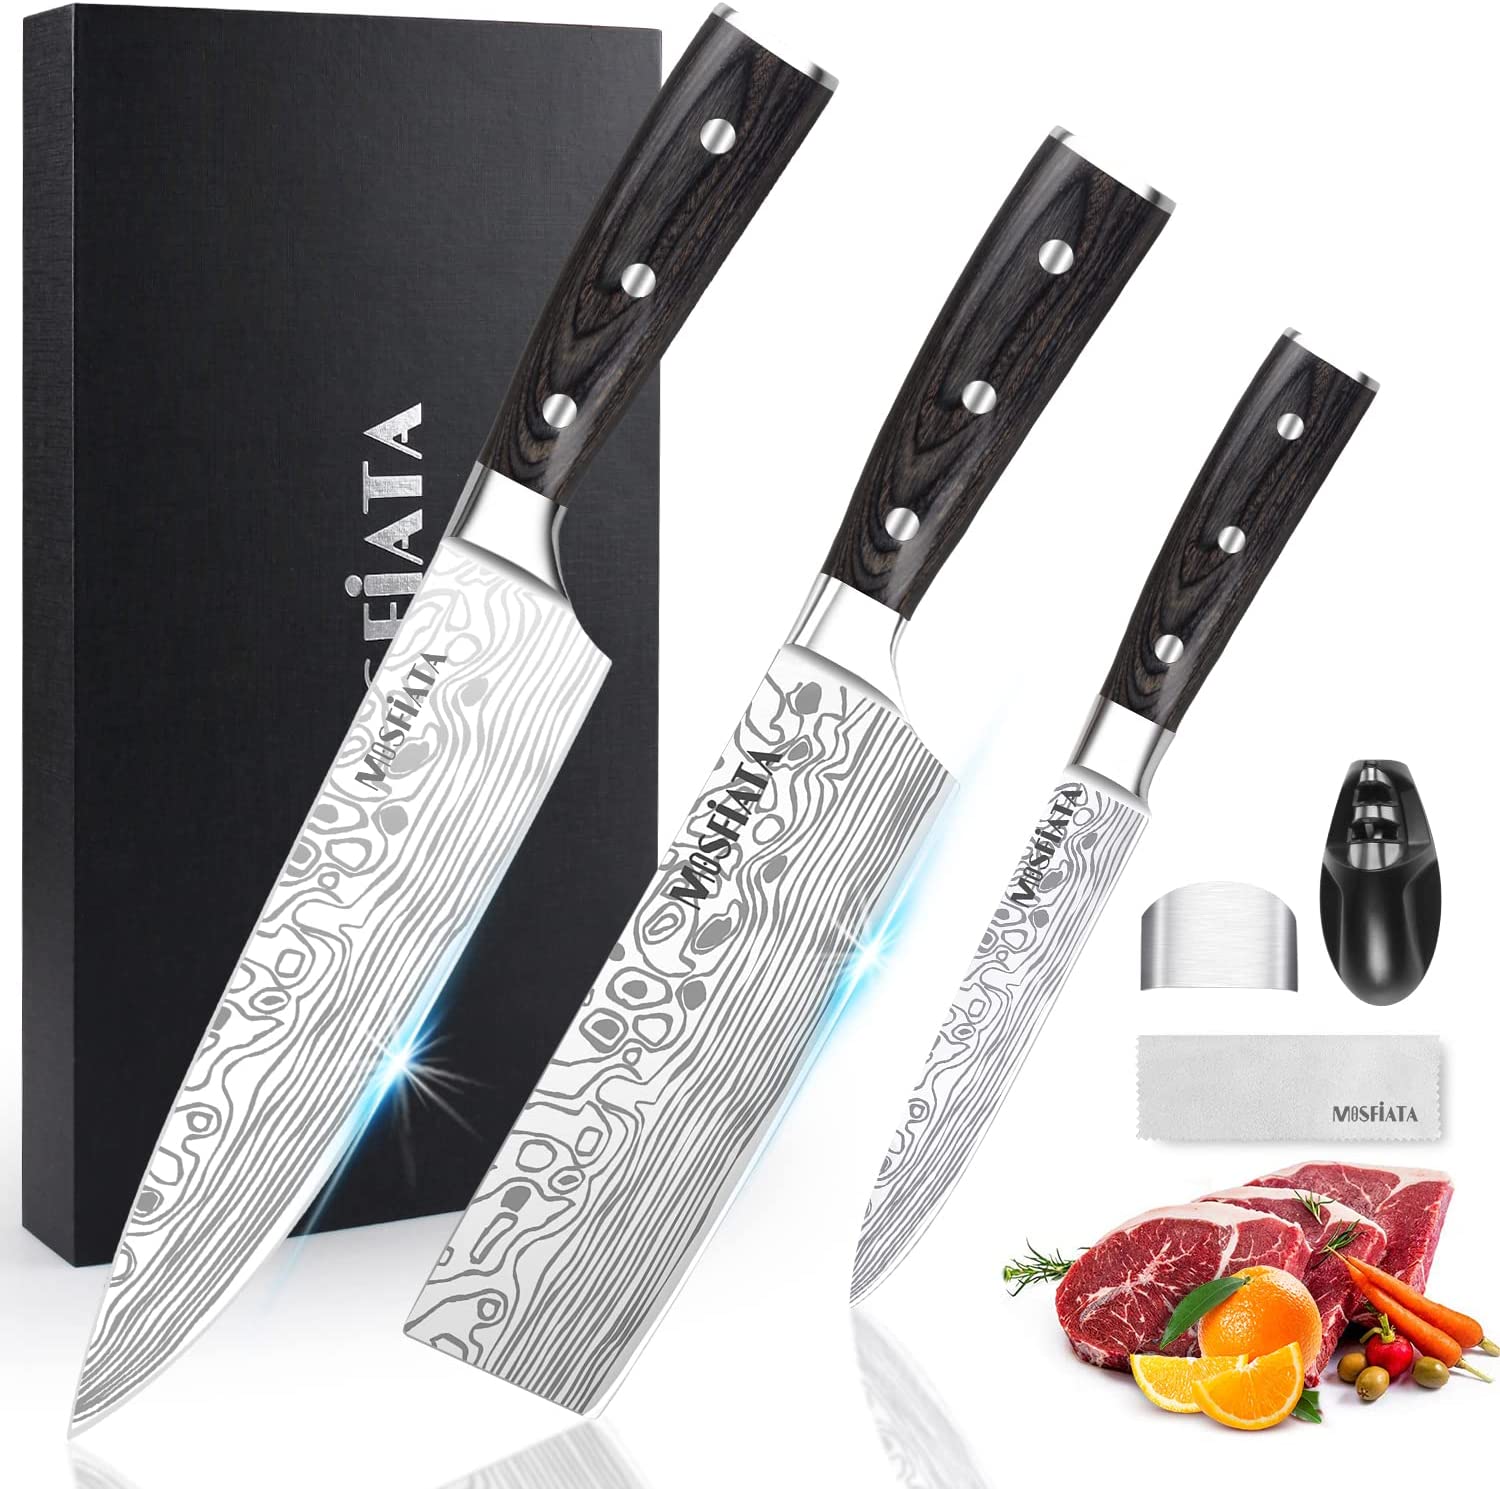 Topfeel Professional Chef Knife Set Sharp Knife, German High Carbon  Stainless Steel Kitchen Knife Set 3 PCS-8 Chefs Knife &7 Santoku Knife&5